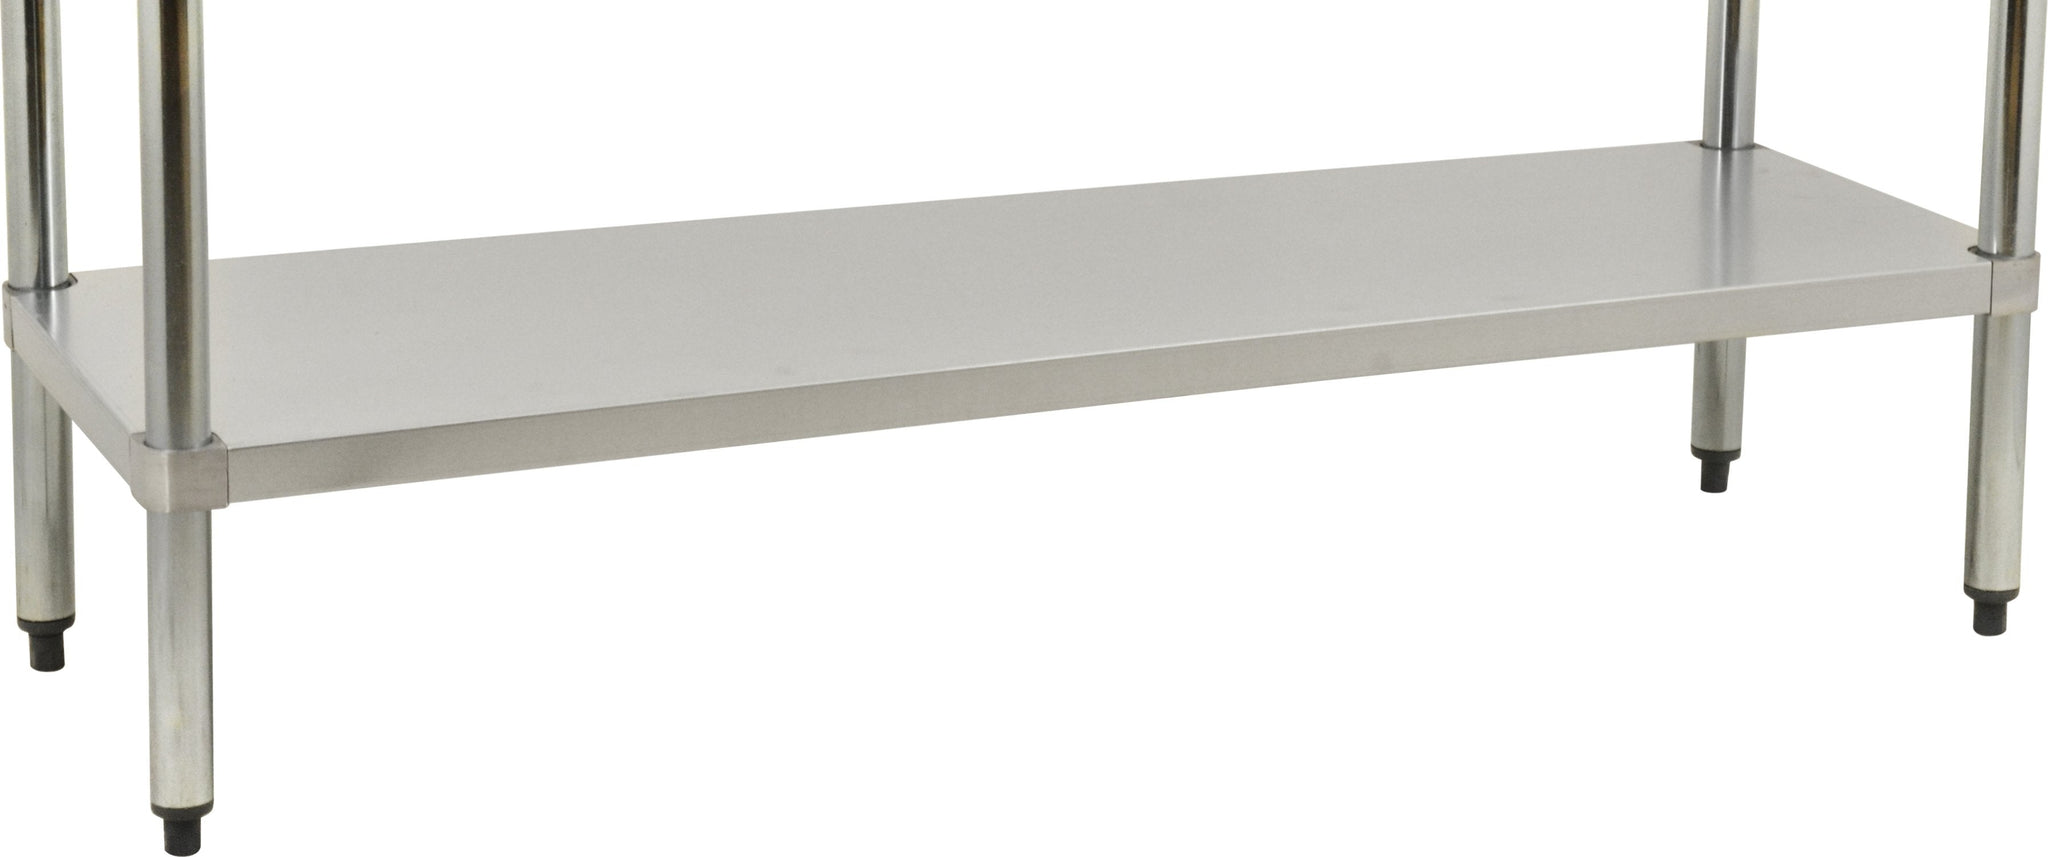 Omcan - 30” x 60” Stainless Steel Undershelf For Work Table - 21618